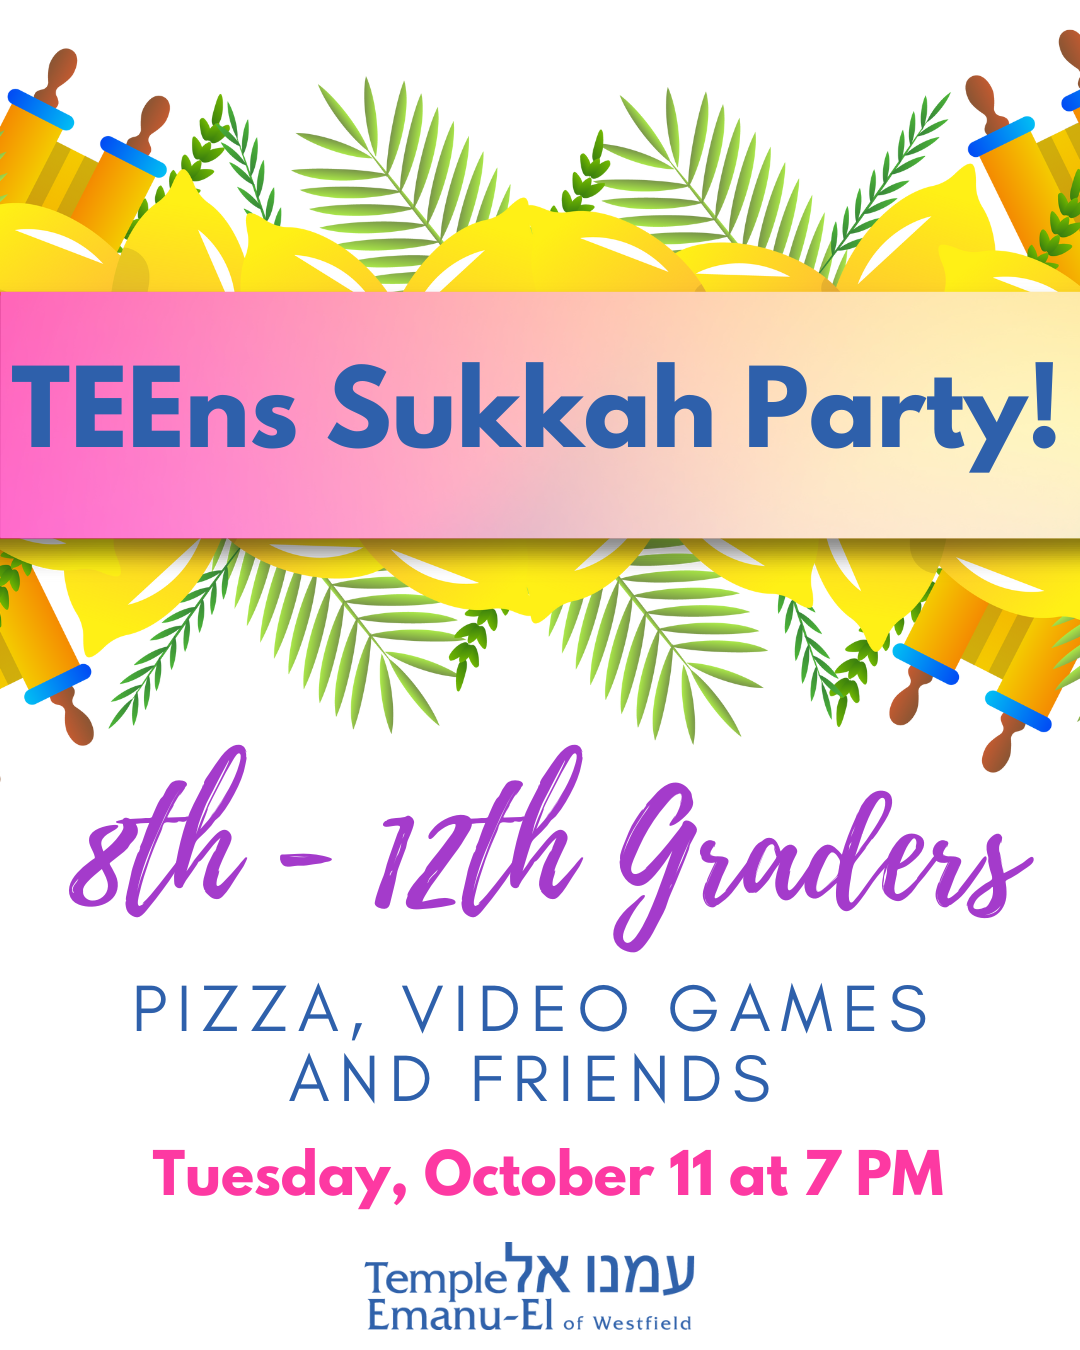 Teen Sukkah Party!